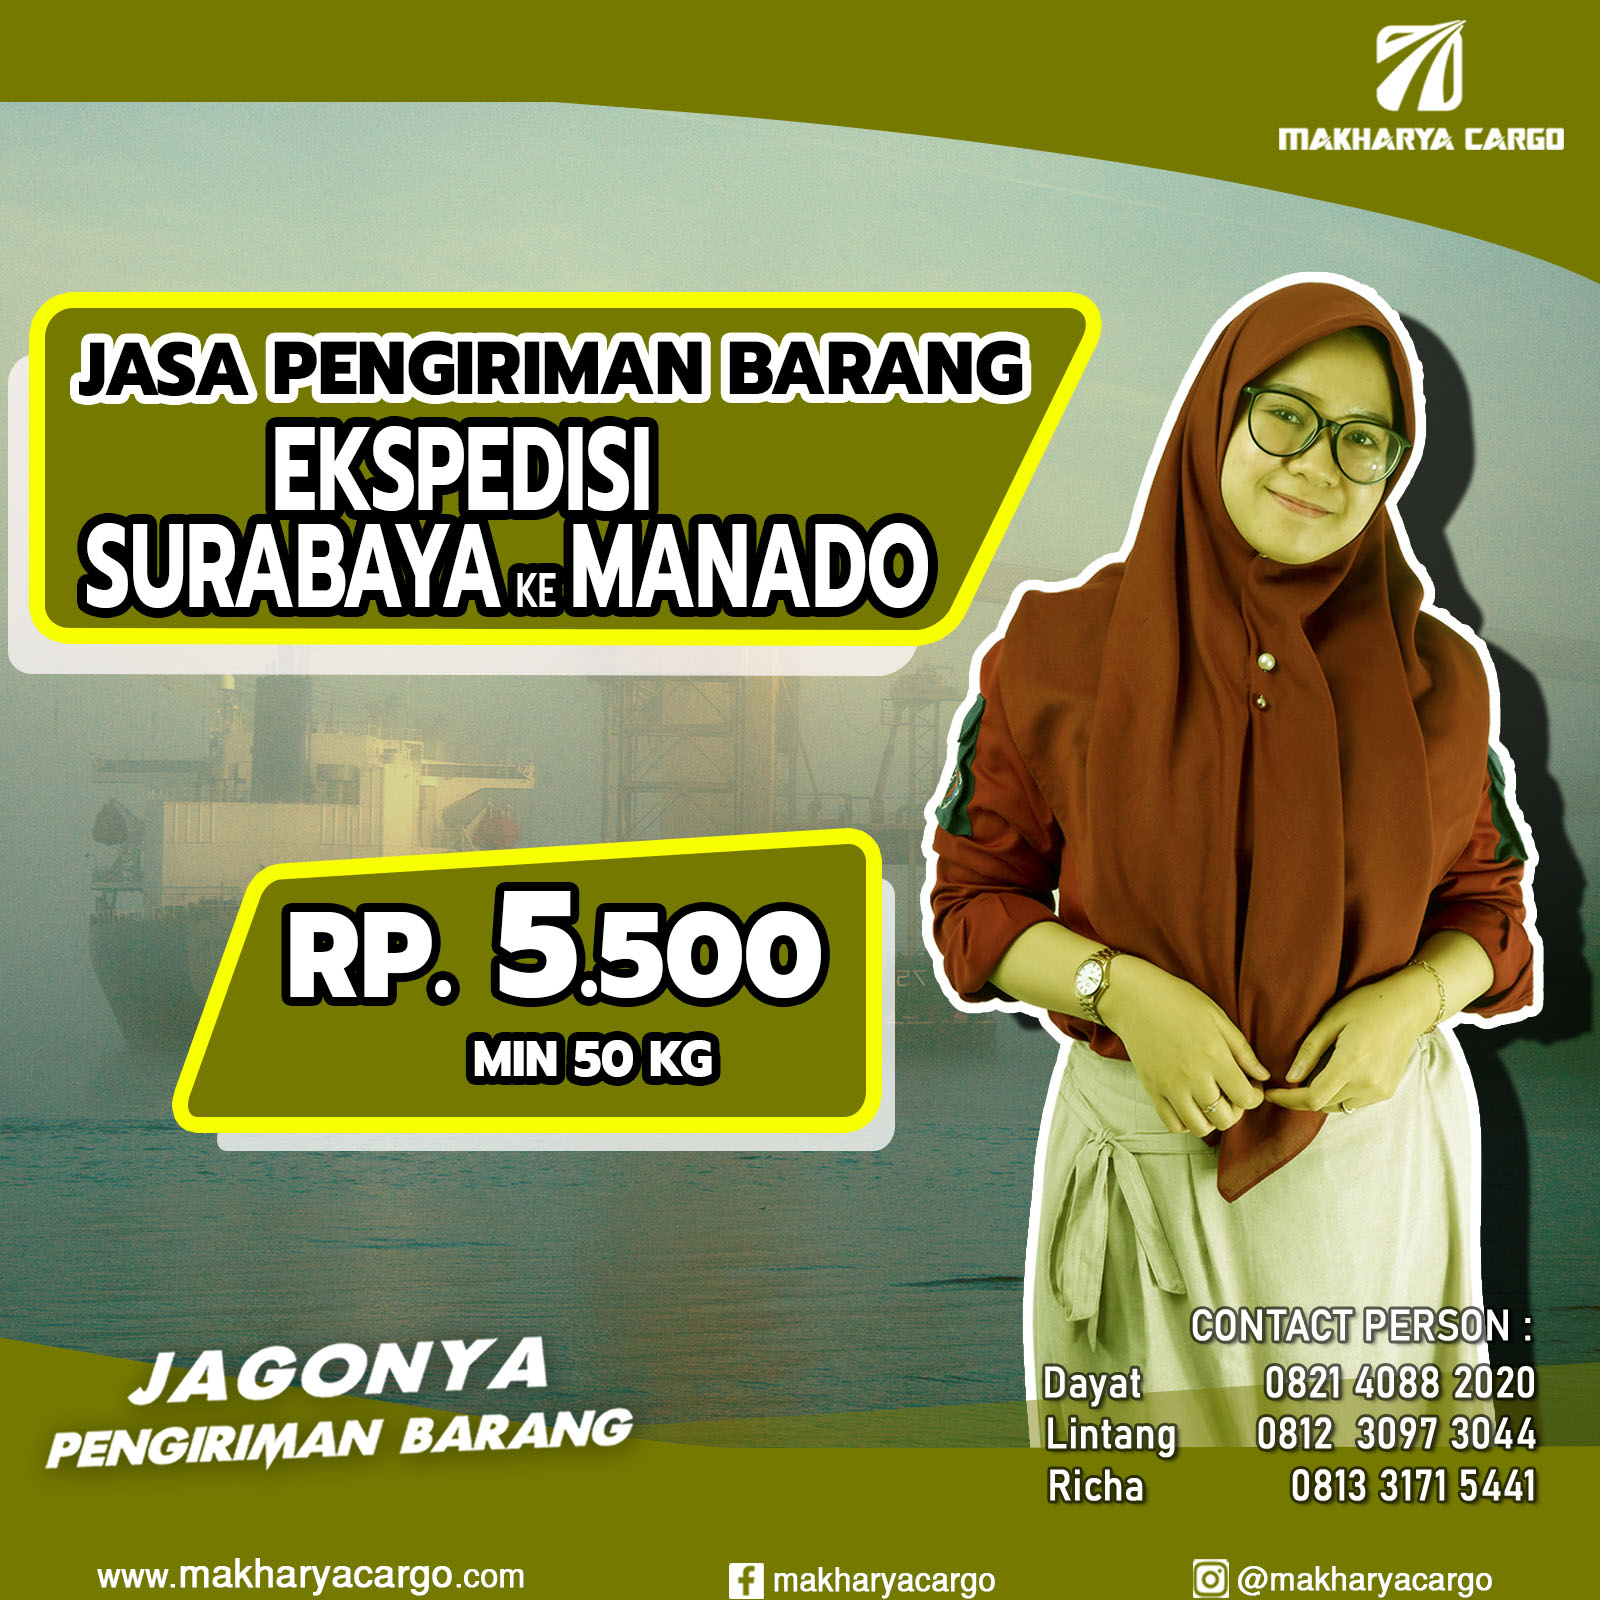 Ekspedisi Surabaya Manado